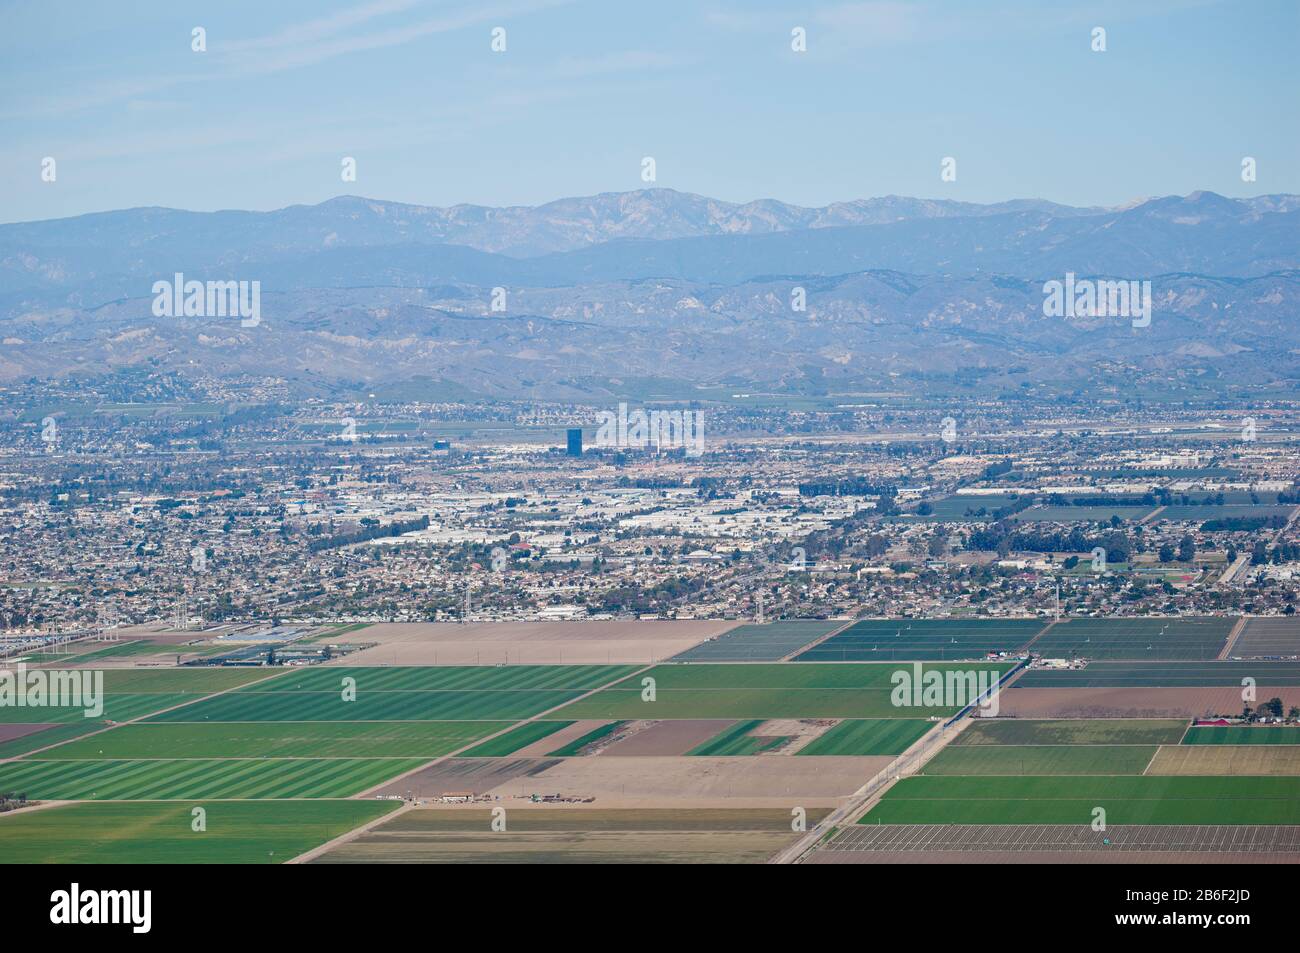 Aerial view of a city, Oxnard, Ventura County, California, USA Stock Photo